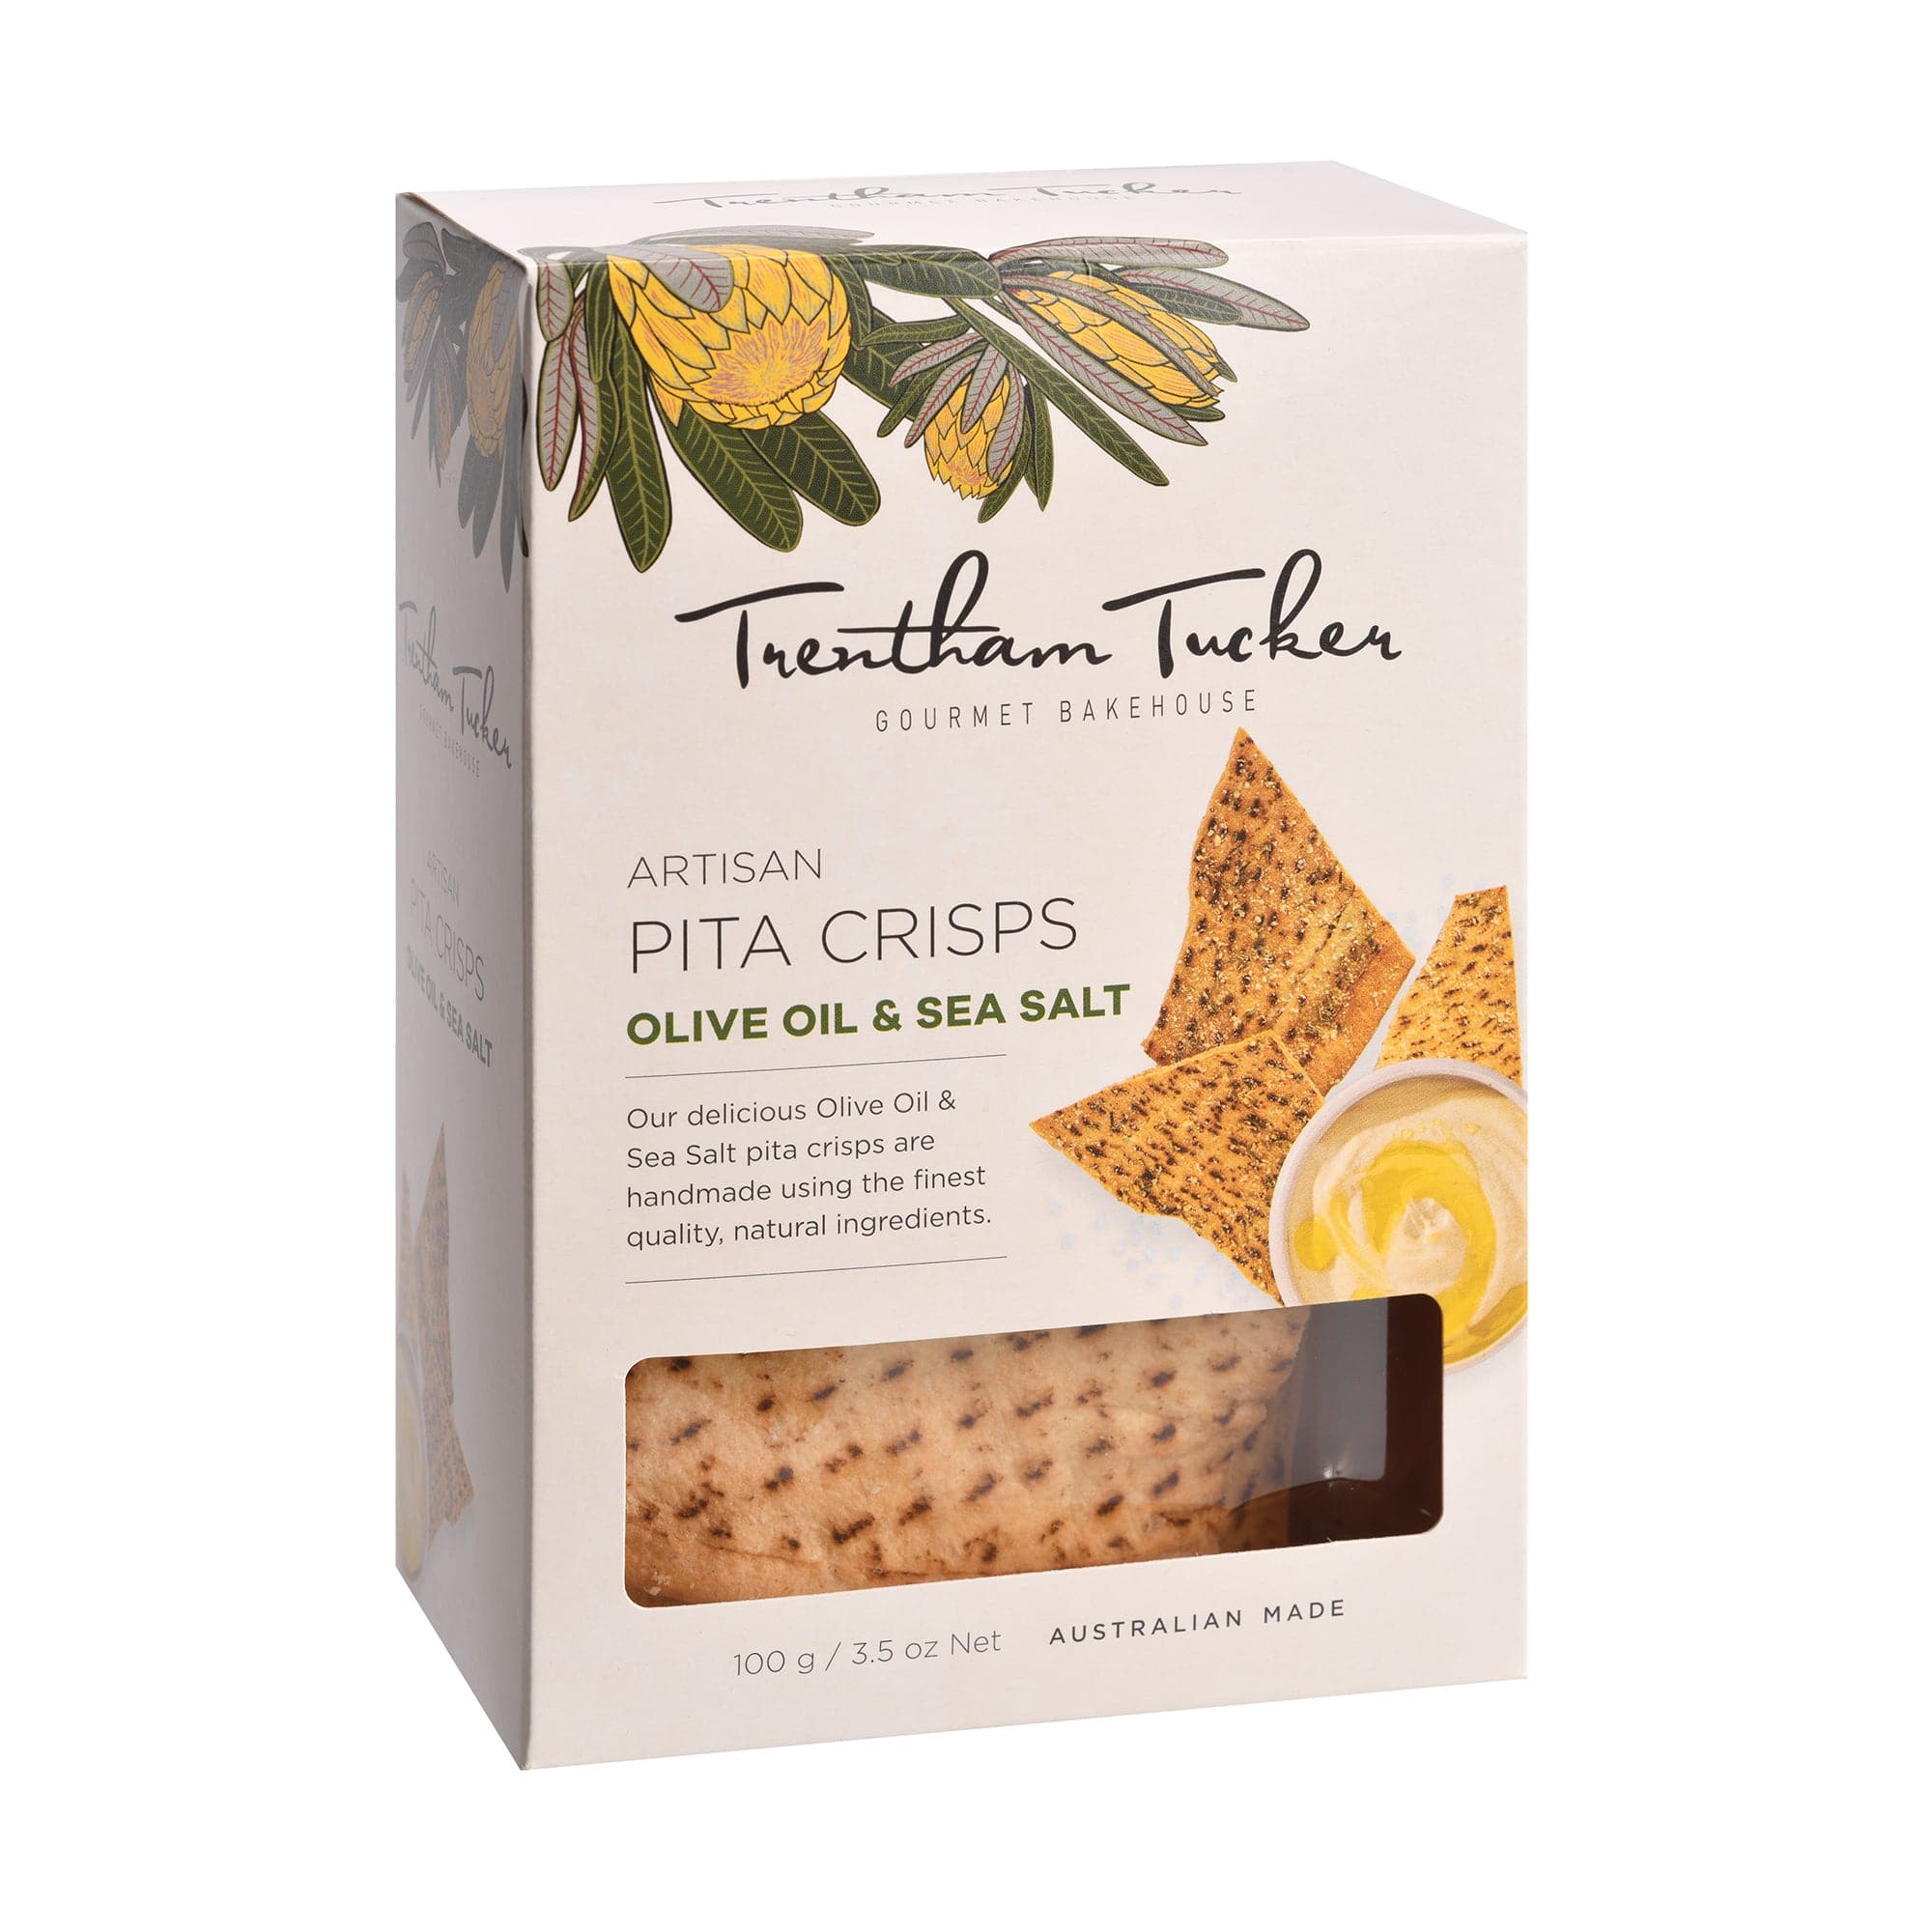 Trentham Tucker Olive Oil & Sea Salt Pita Crisps 100g